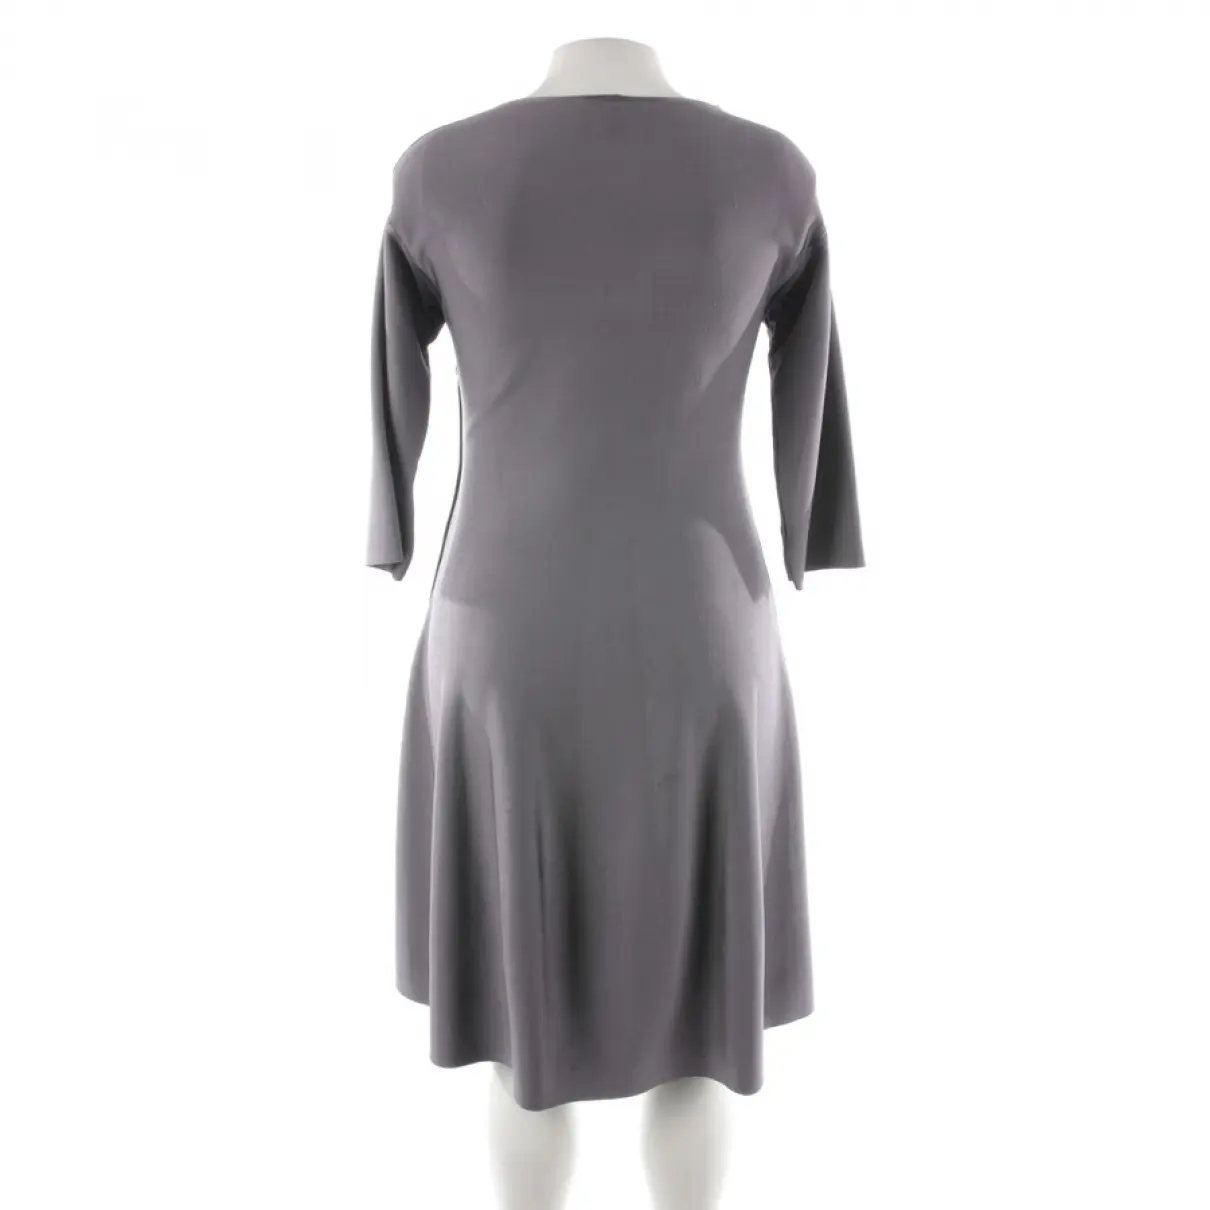 Buy Giorgio Armani Dress online